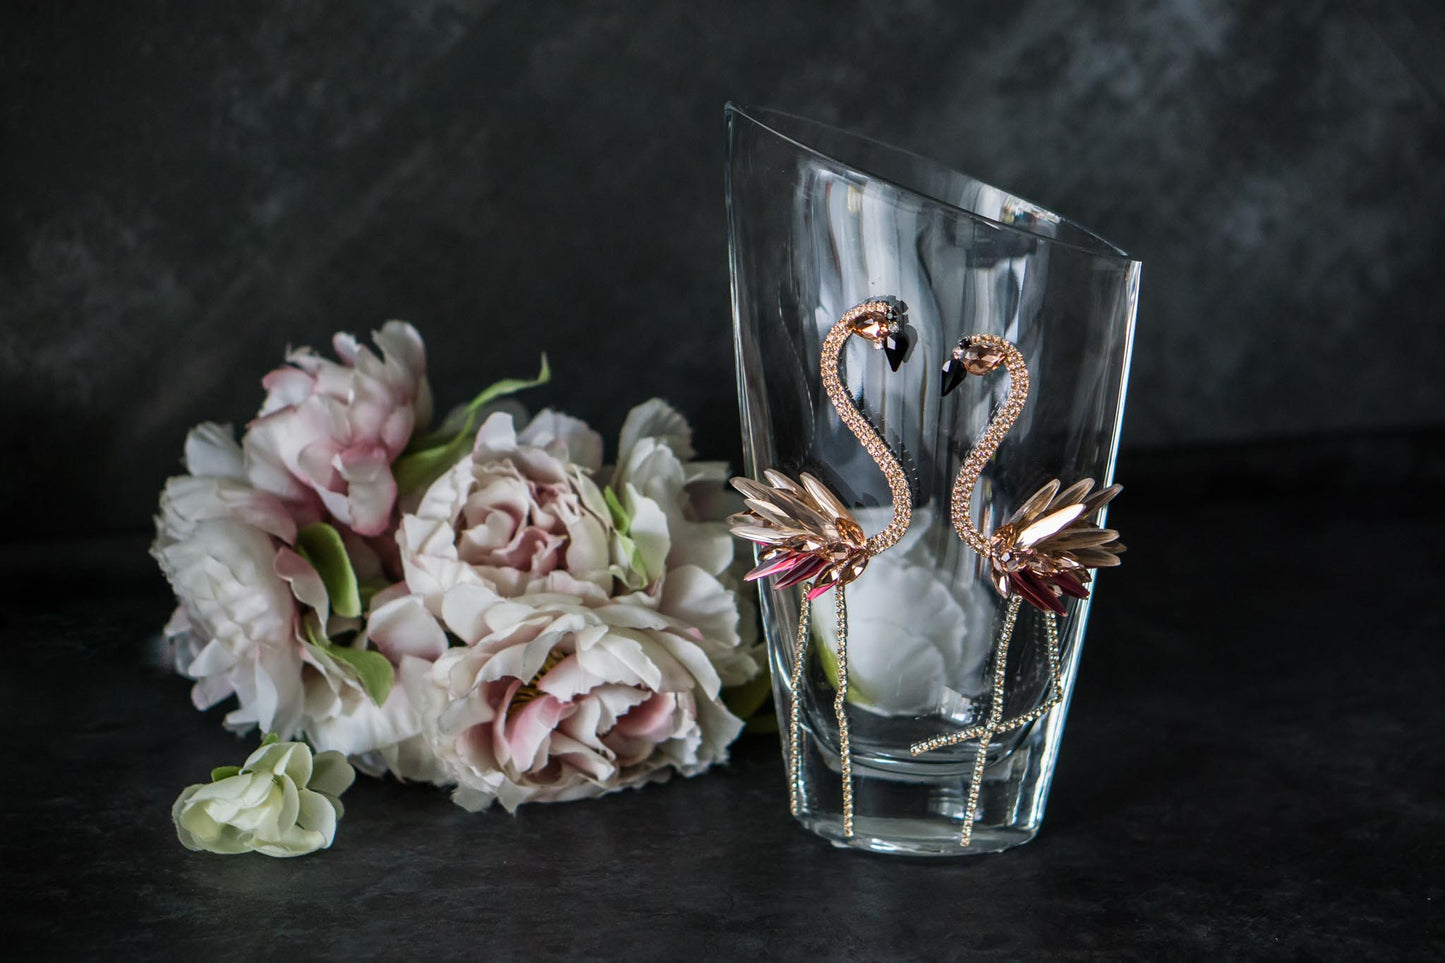 Exquisite flamingo gift for weddings